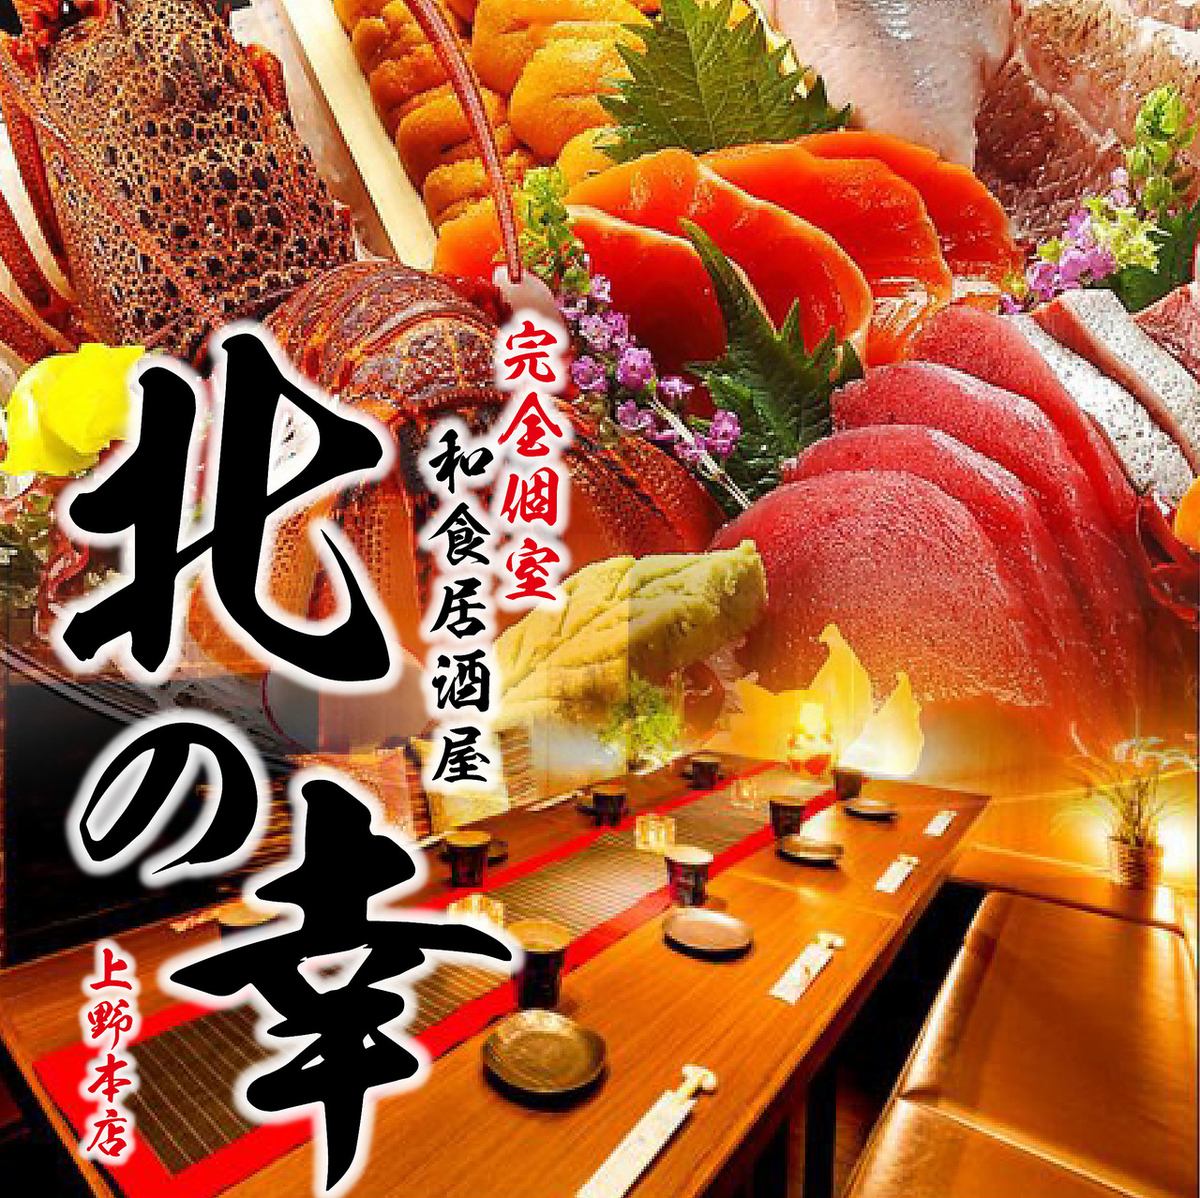 Ueno Private room Izakaya Seafood Local sake Horigotatsu Banquet Entertainment All-you-can-drink Hamayaki All-you-can-eat